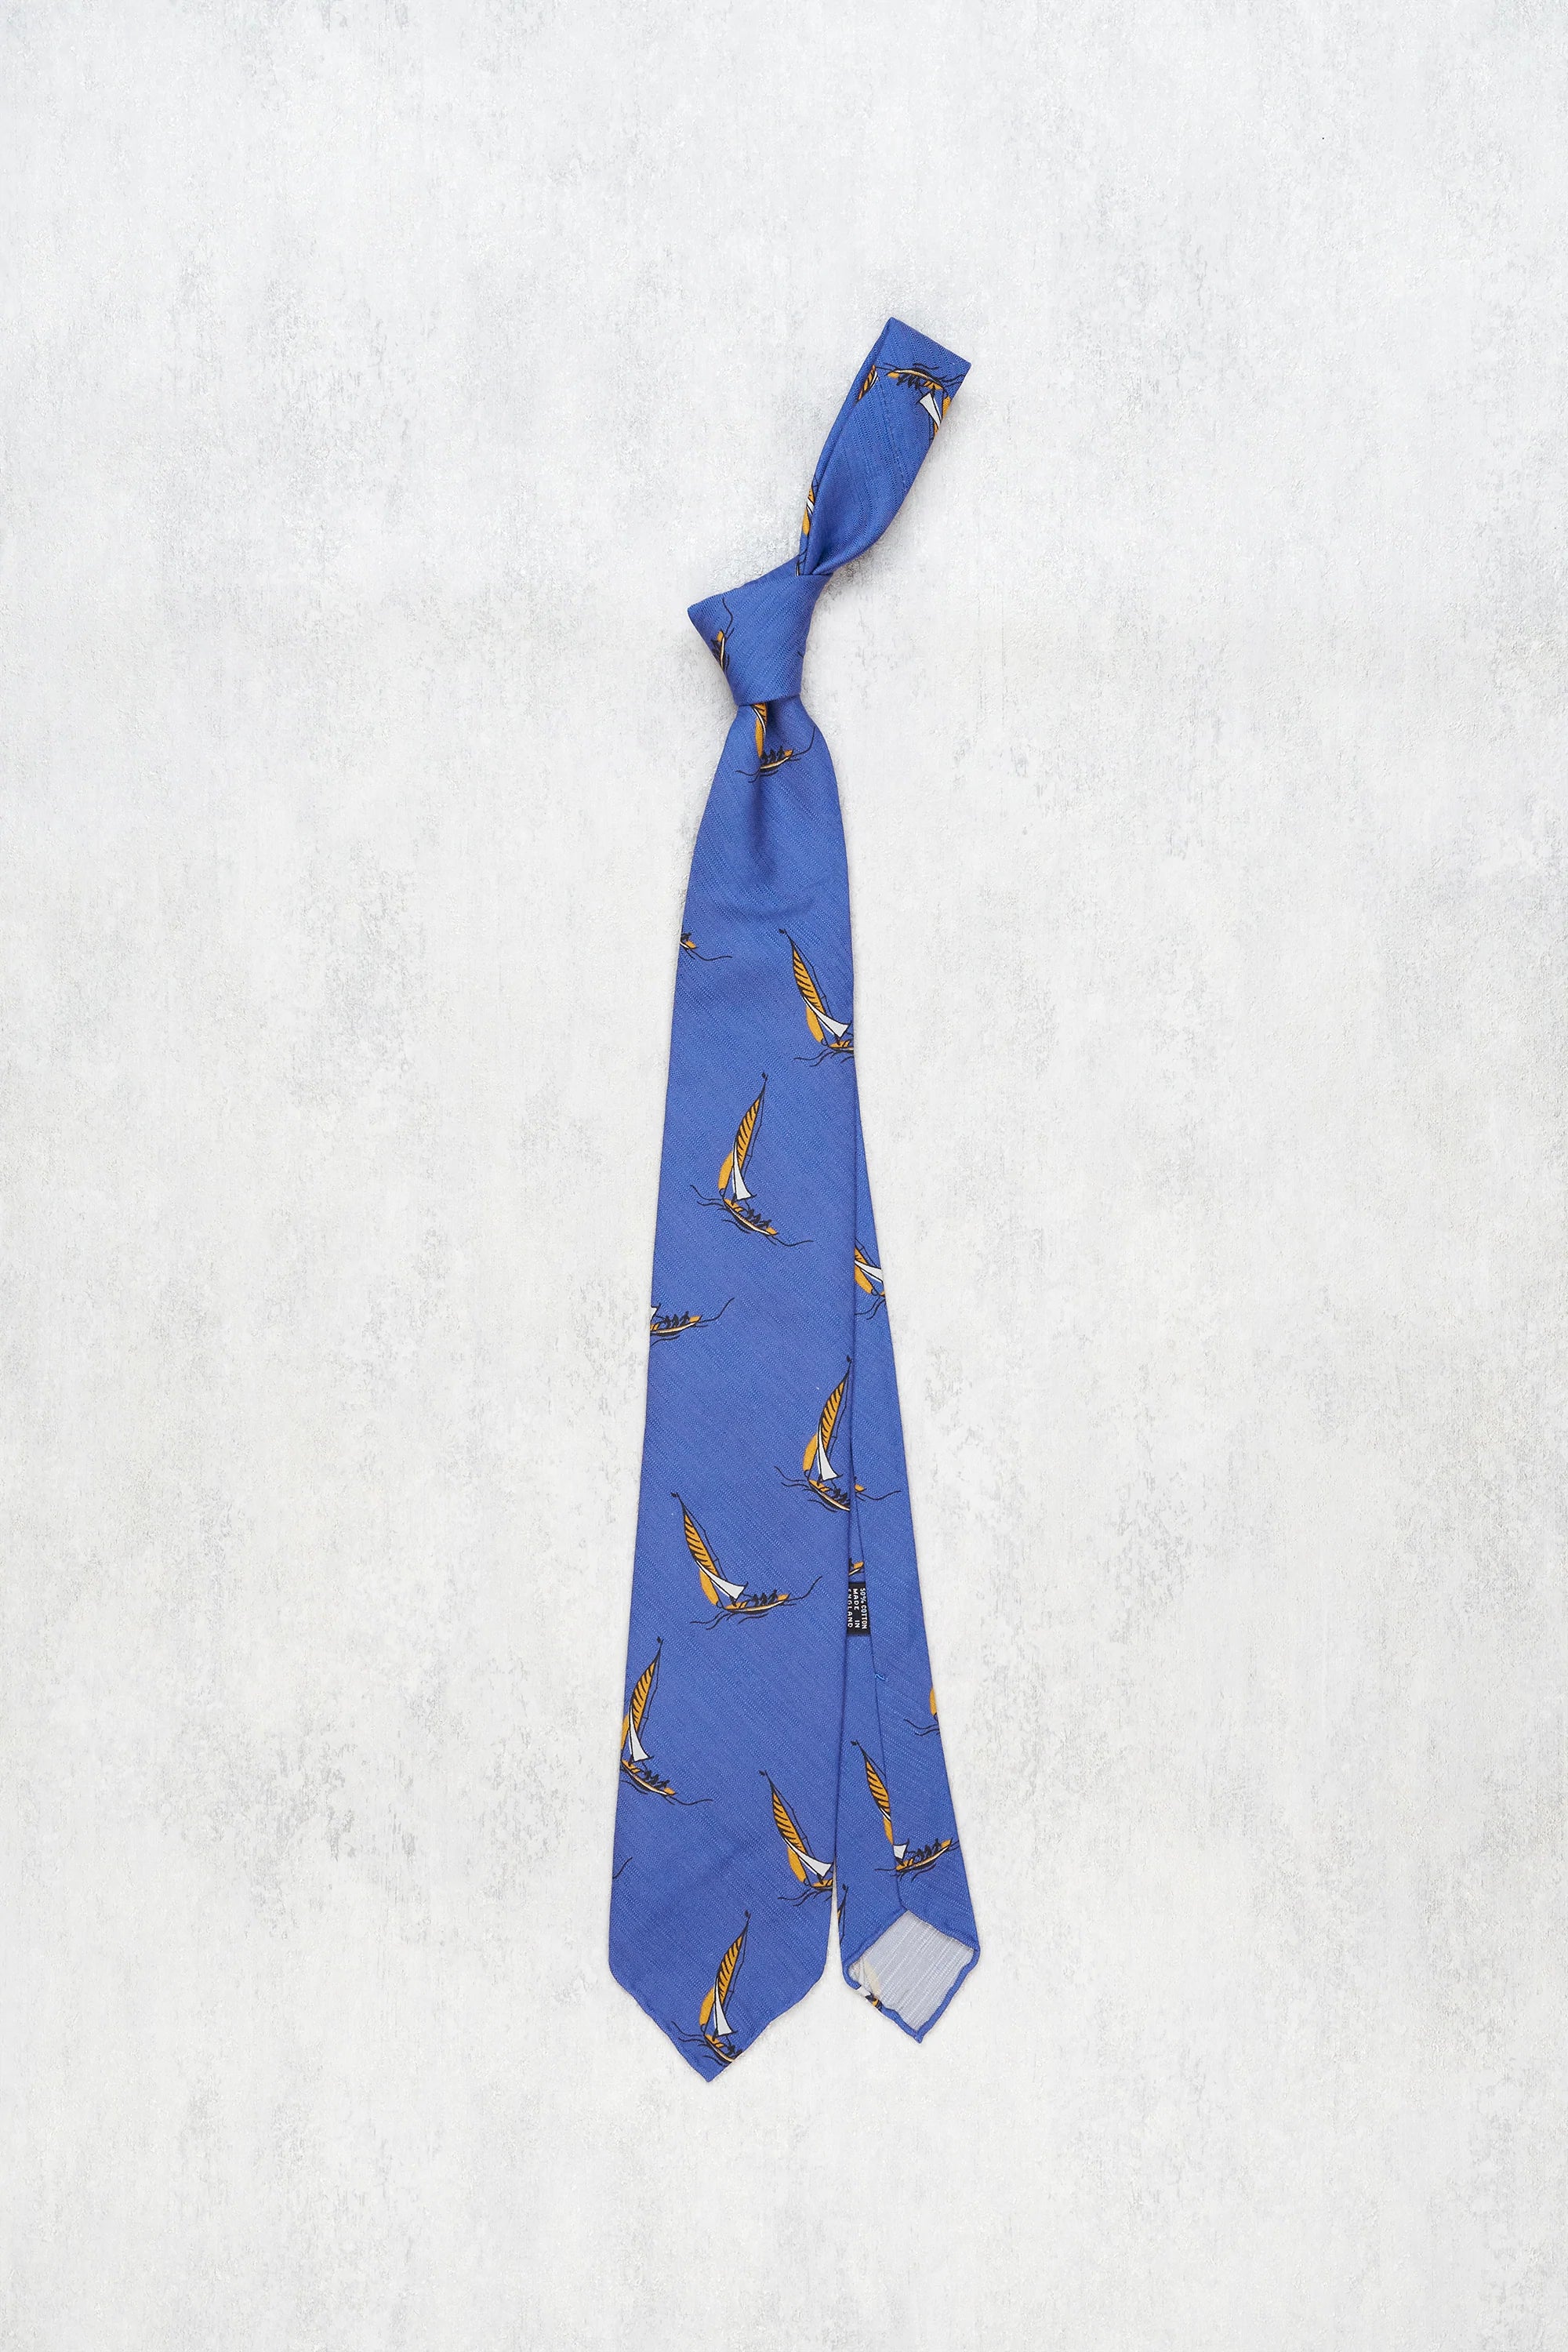 Drake's Blue Sailboat Pattern Silk/Cotton Tie